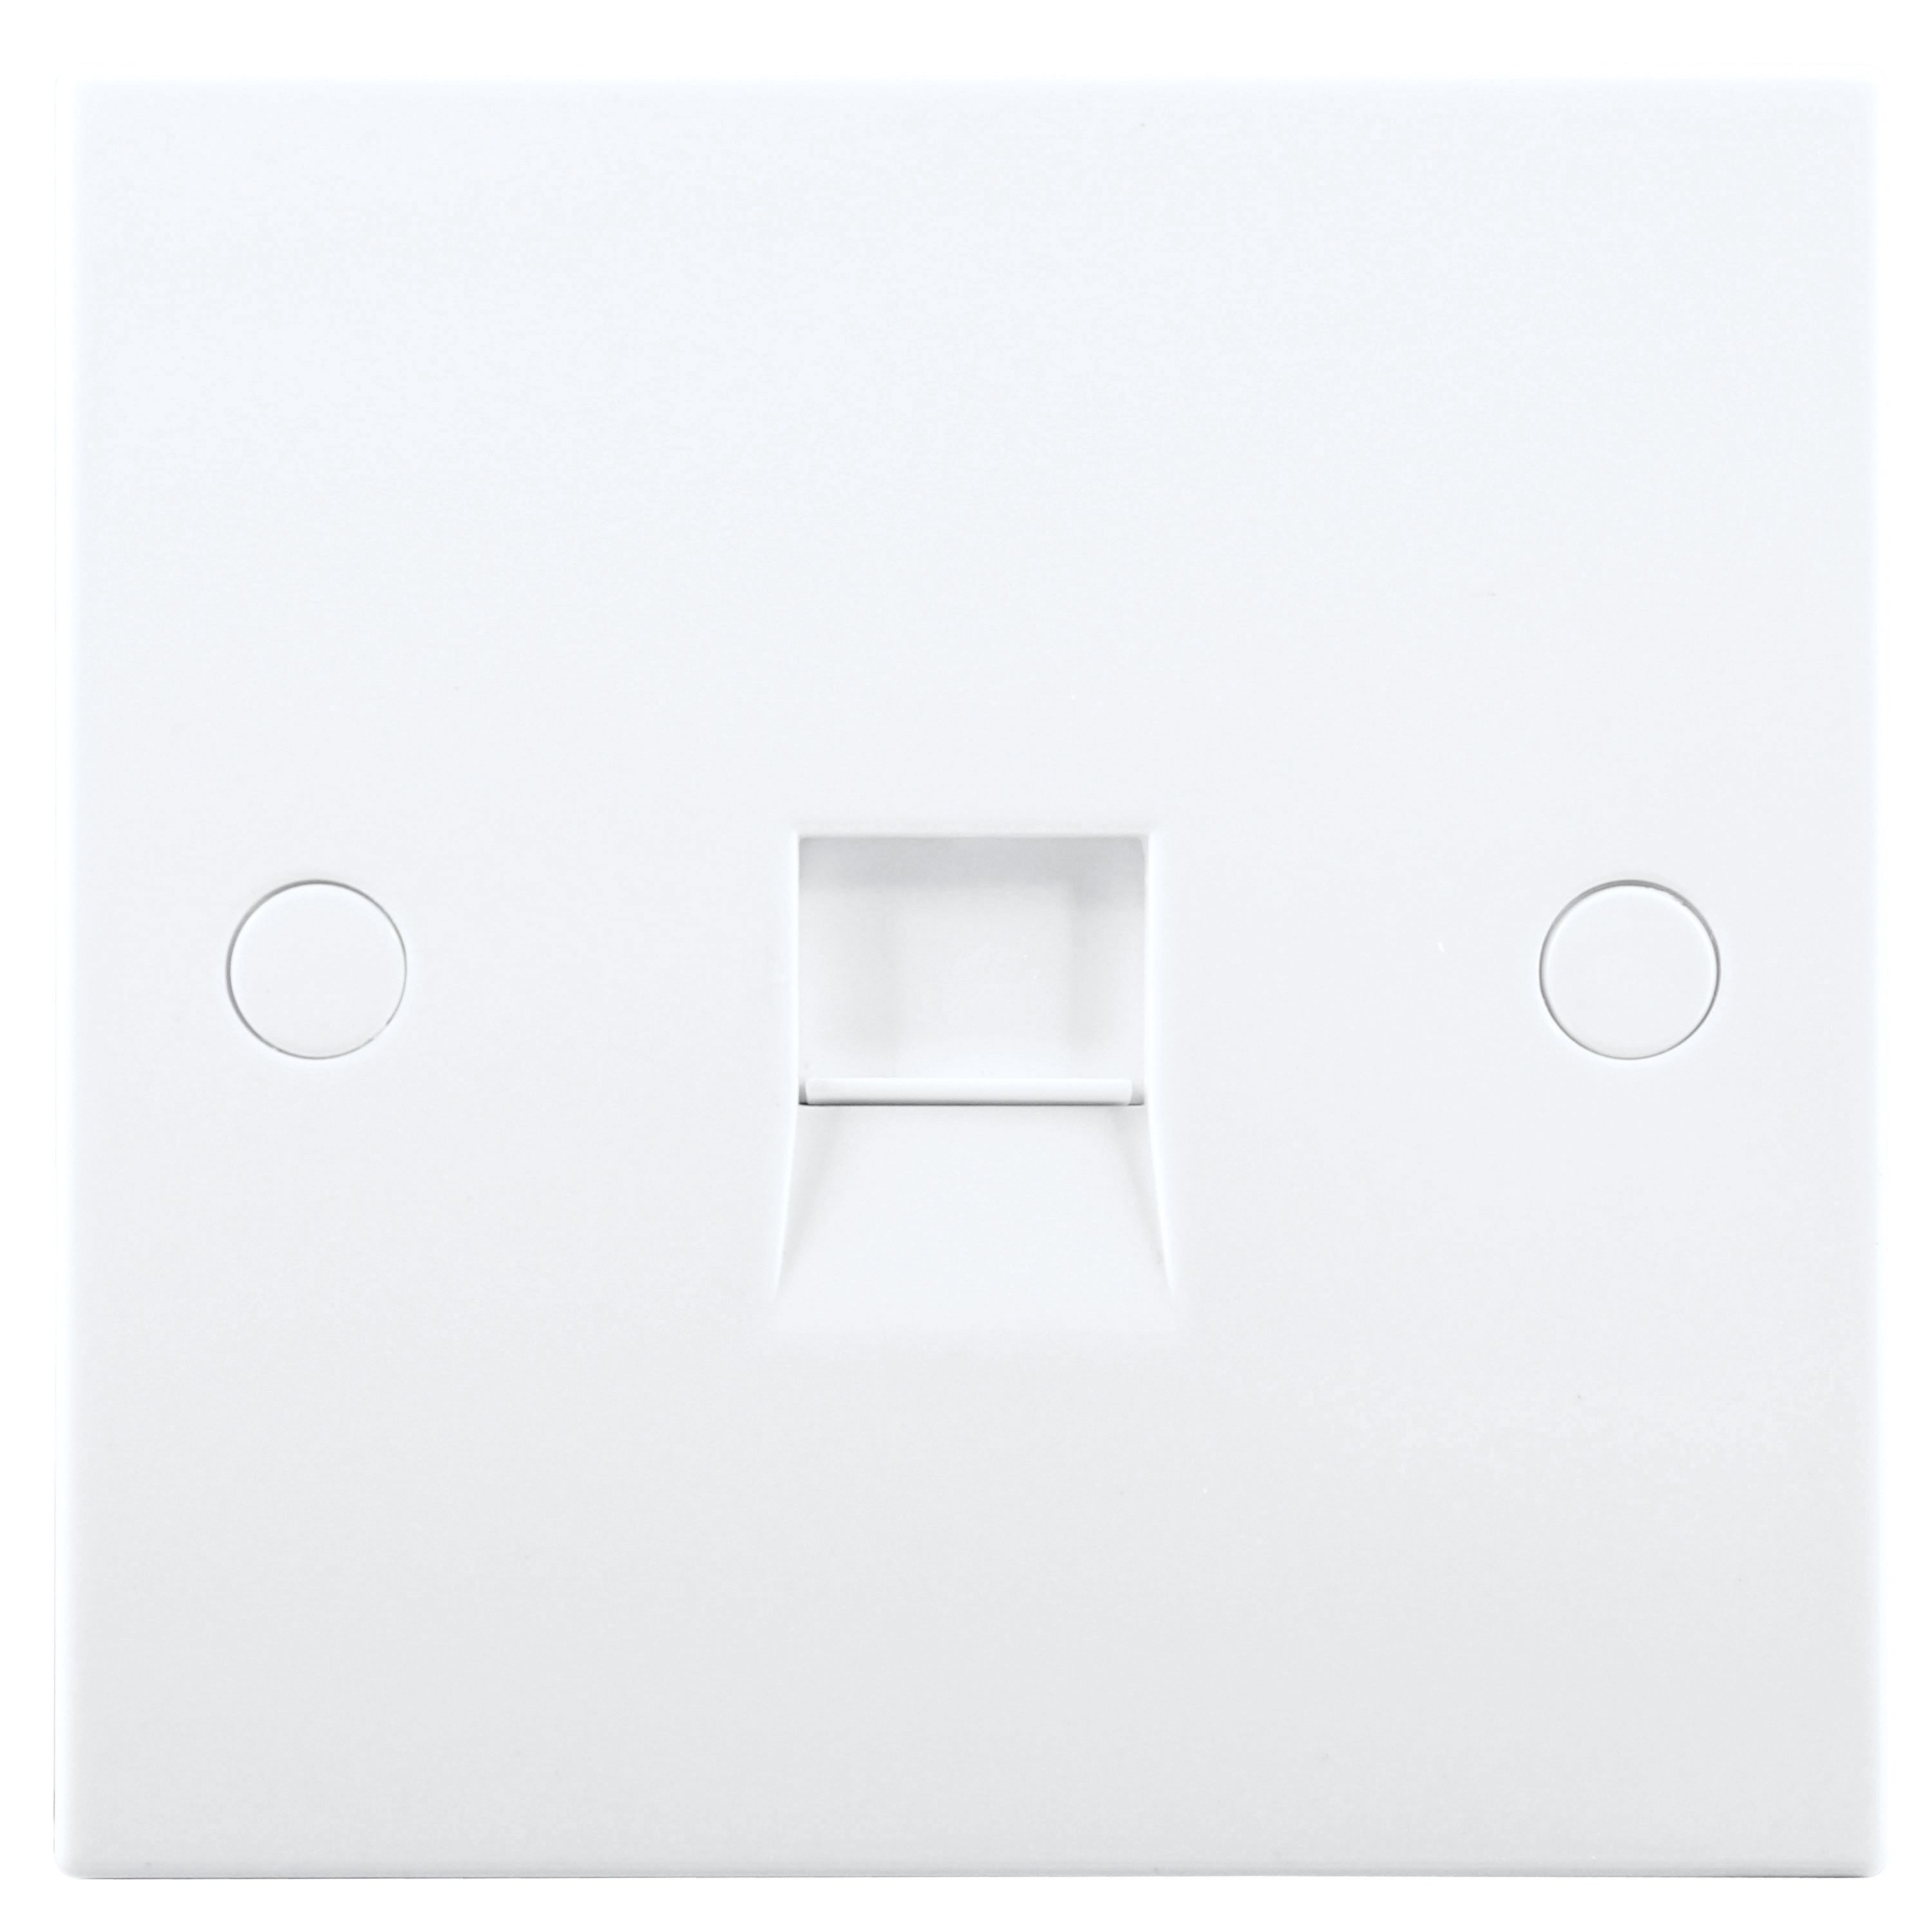 Image of BG Single Master Telephone Outlet Socket - White